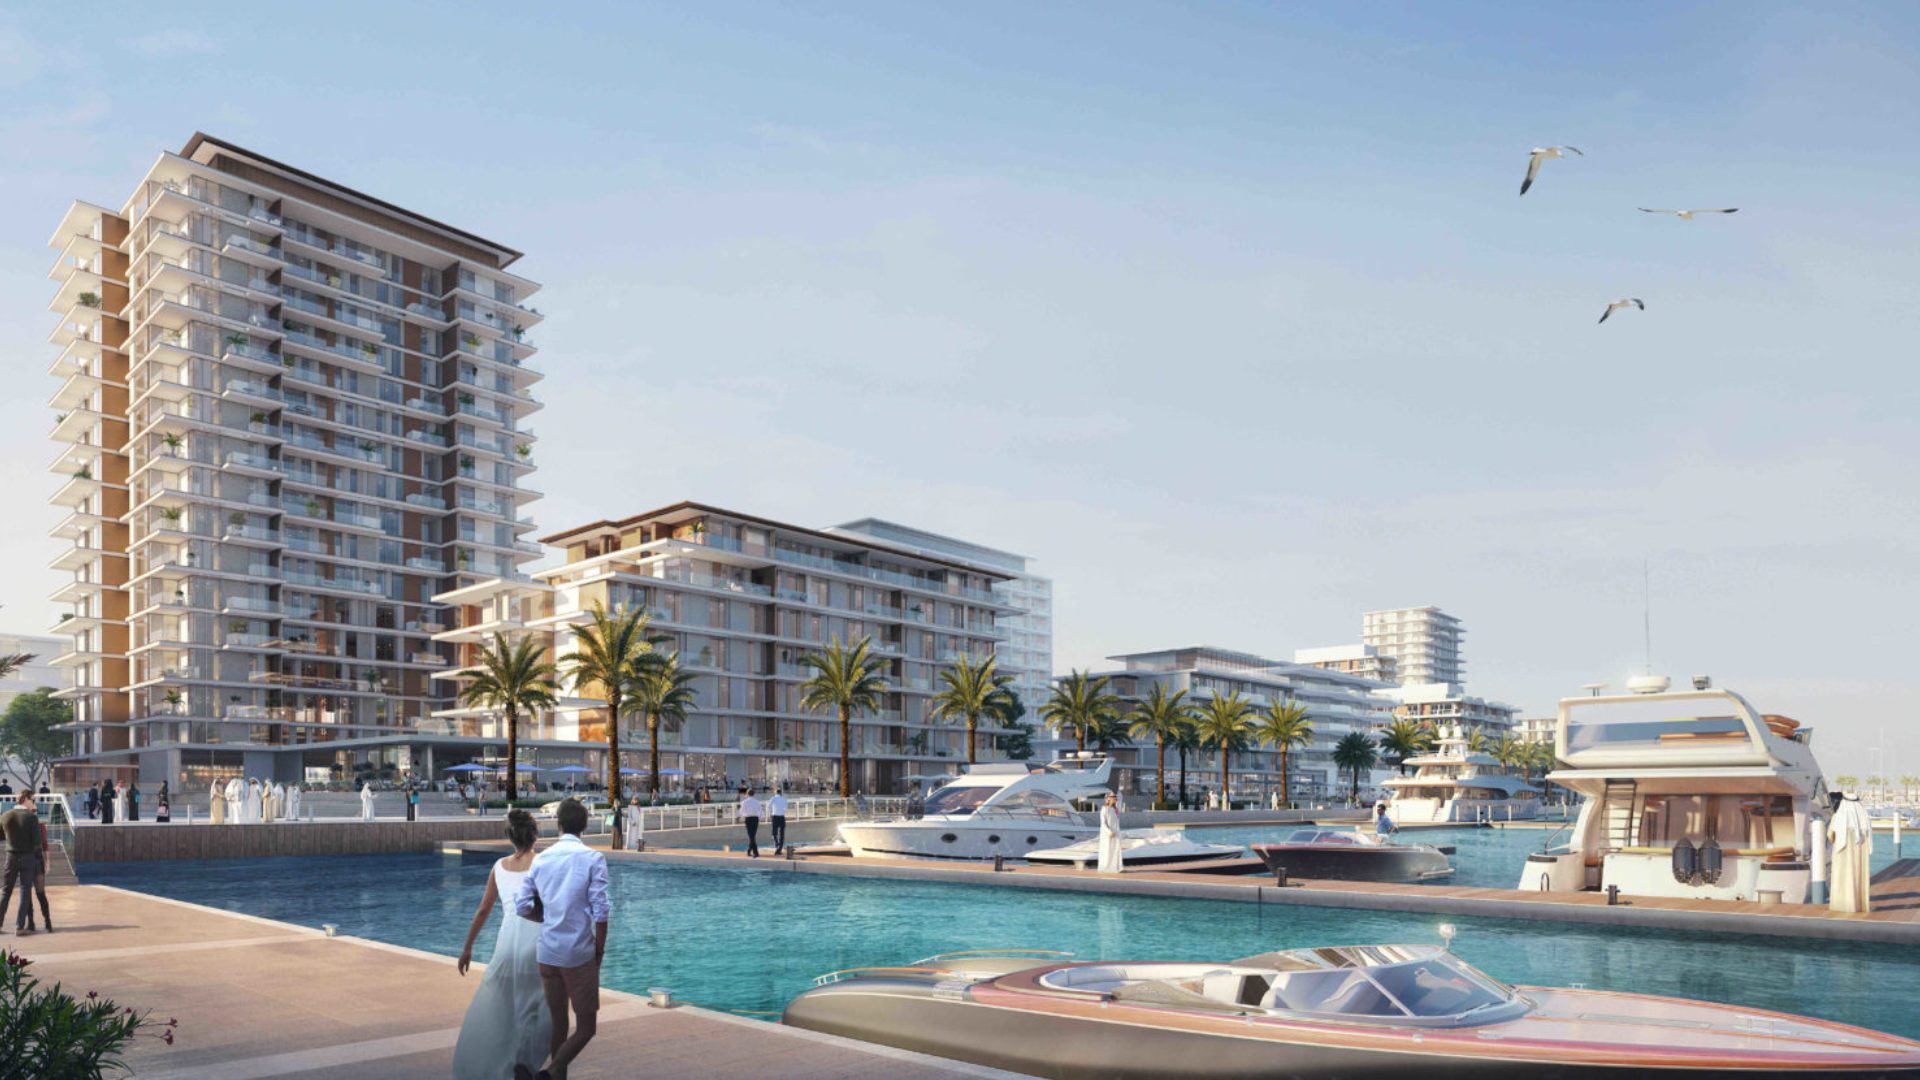 SEASCAPE by Emaar Properties in Mina Rashid (Port Rashid), Dubai, UAE - 2